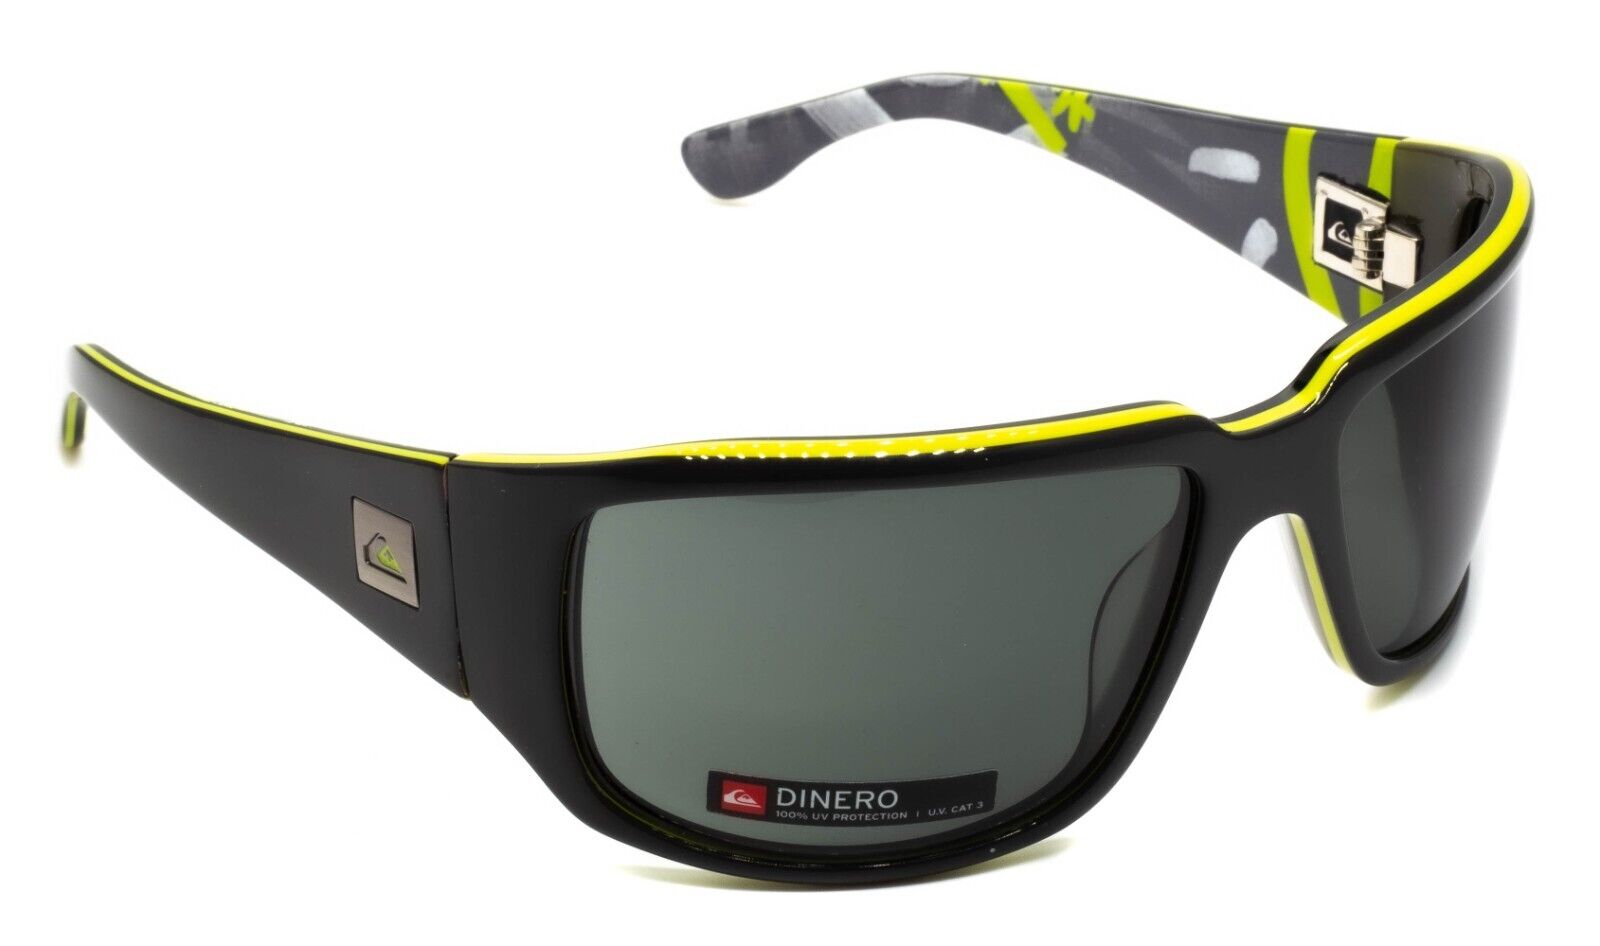 QUIKSILVER Sunglasses DINERO UV CAT Eyewear GGV Eyewear Glasses Shades - EQS1104/XSSG 64mm 3